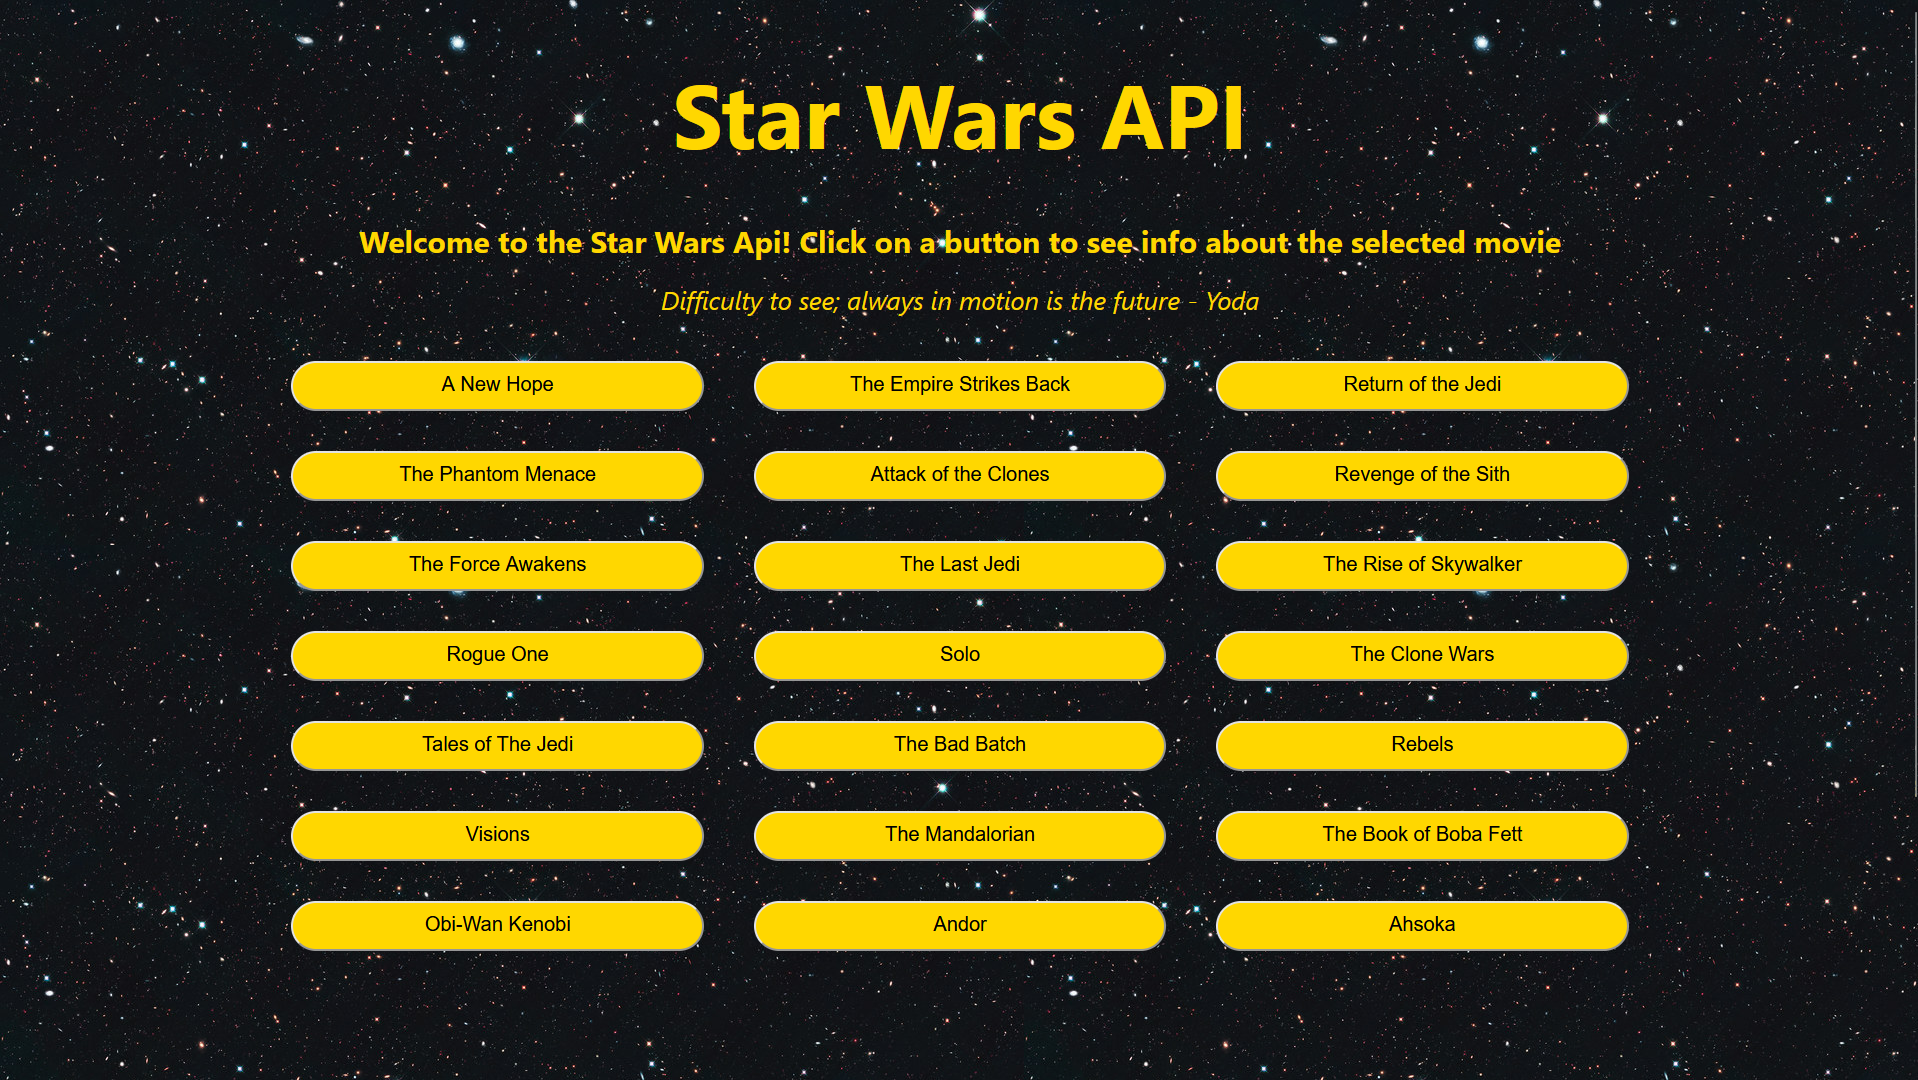 Landing page for Star Wars Api